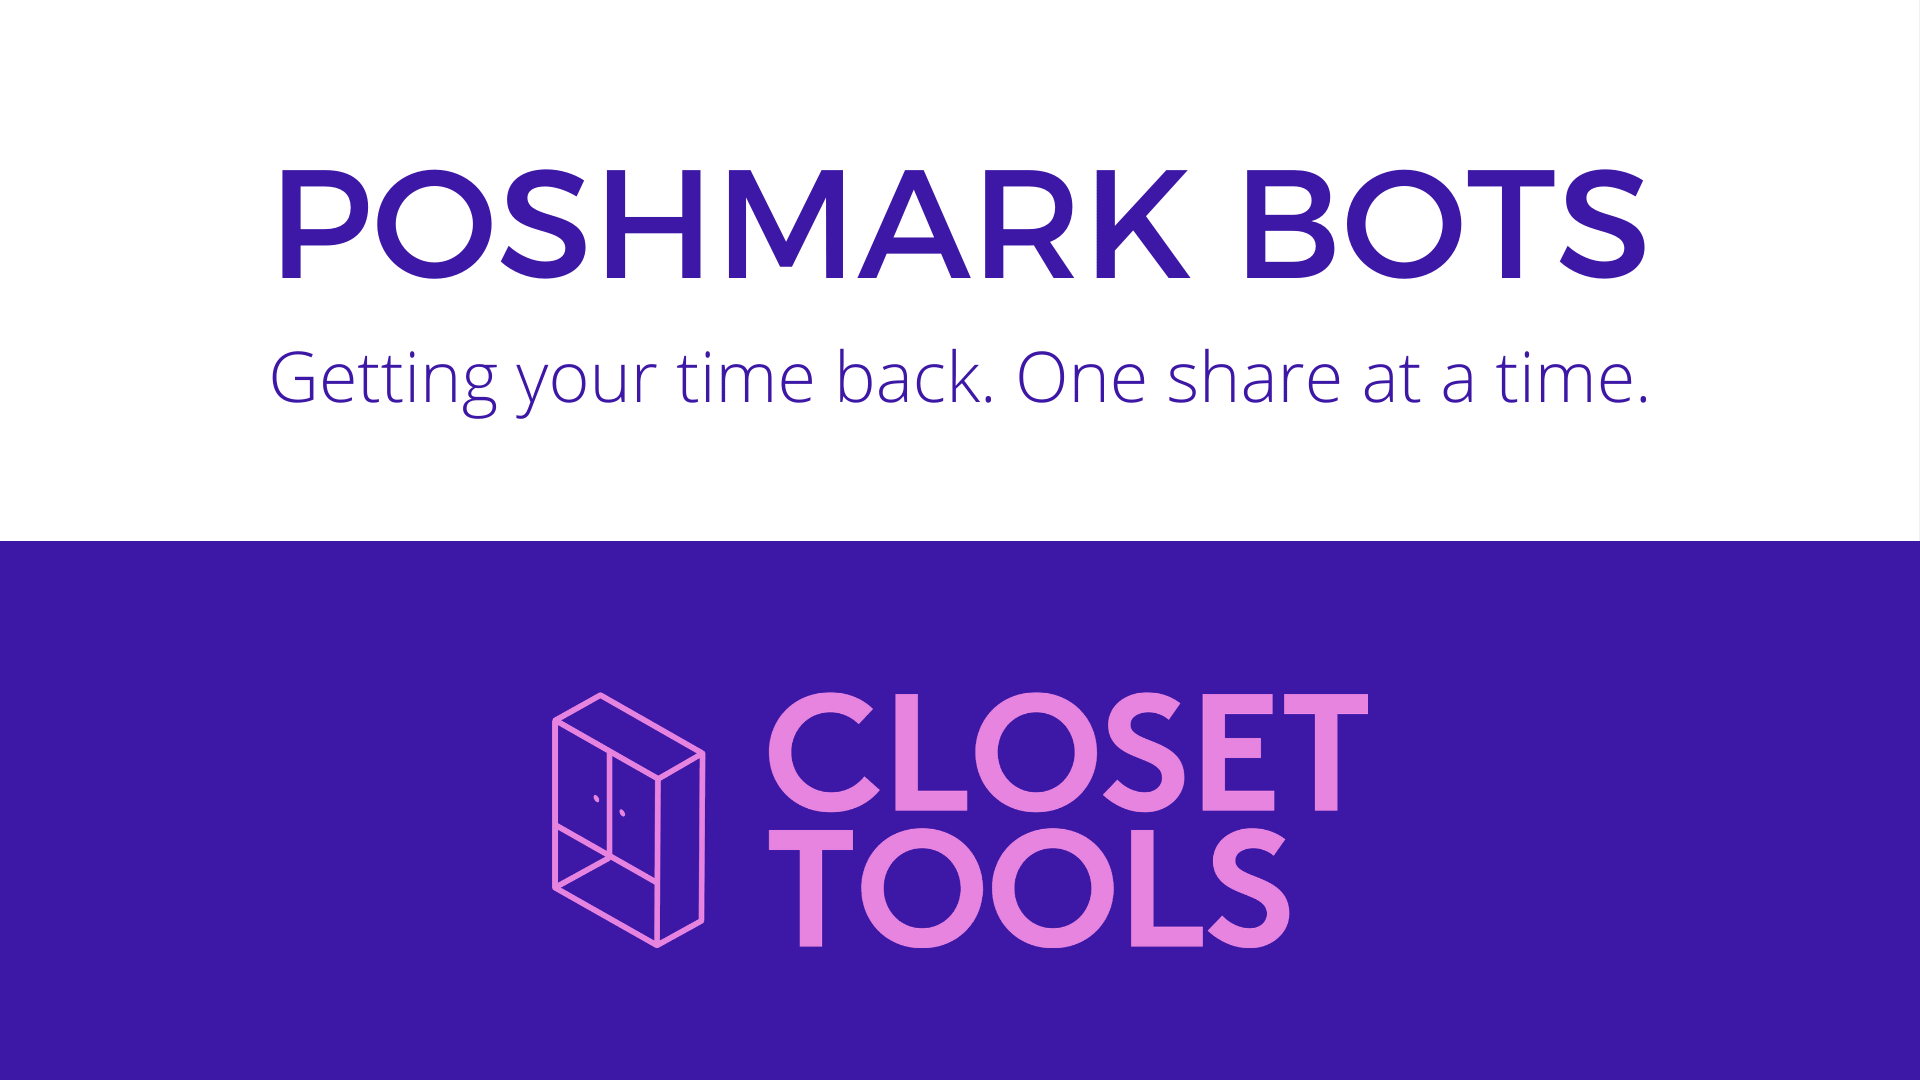 poshmark pro tools free download